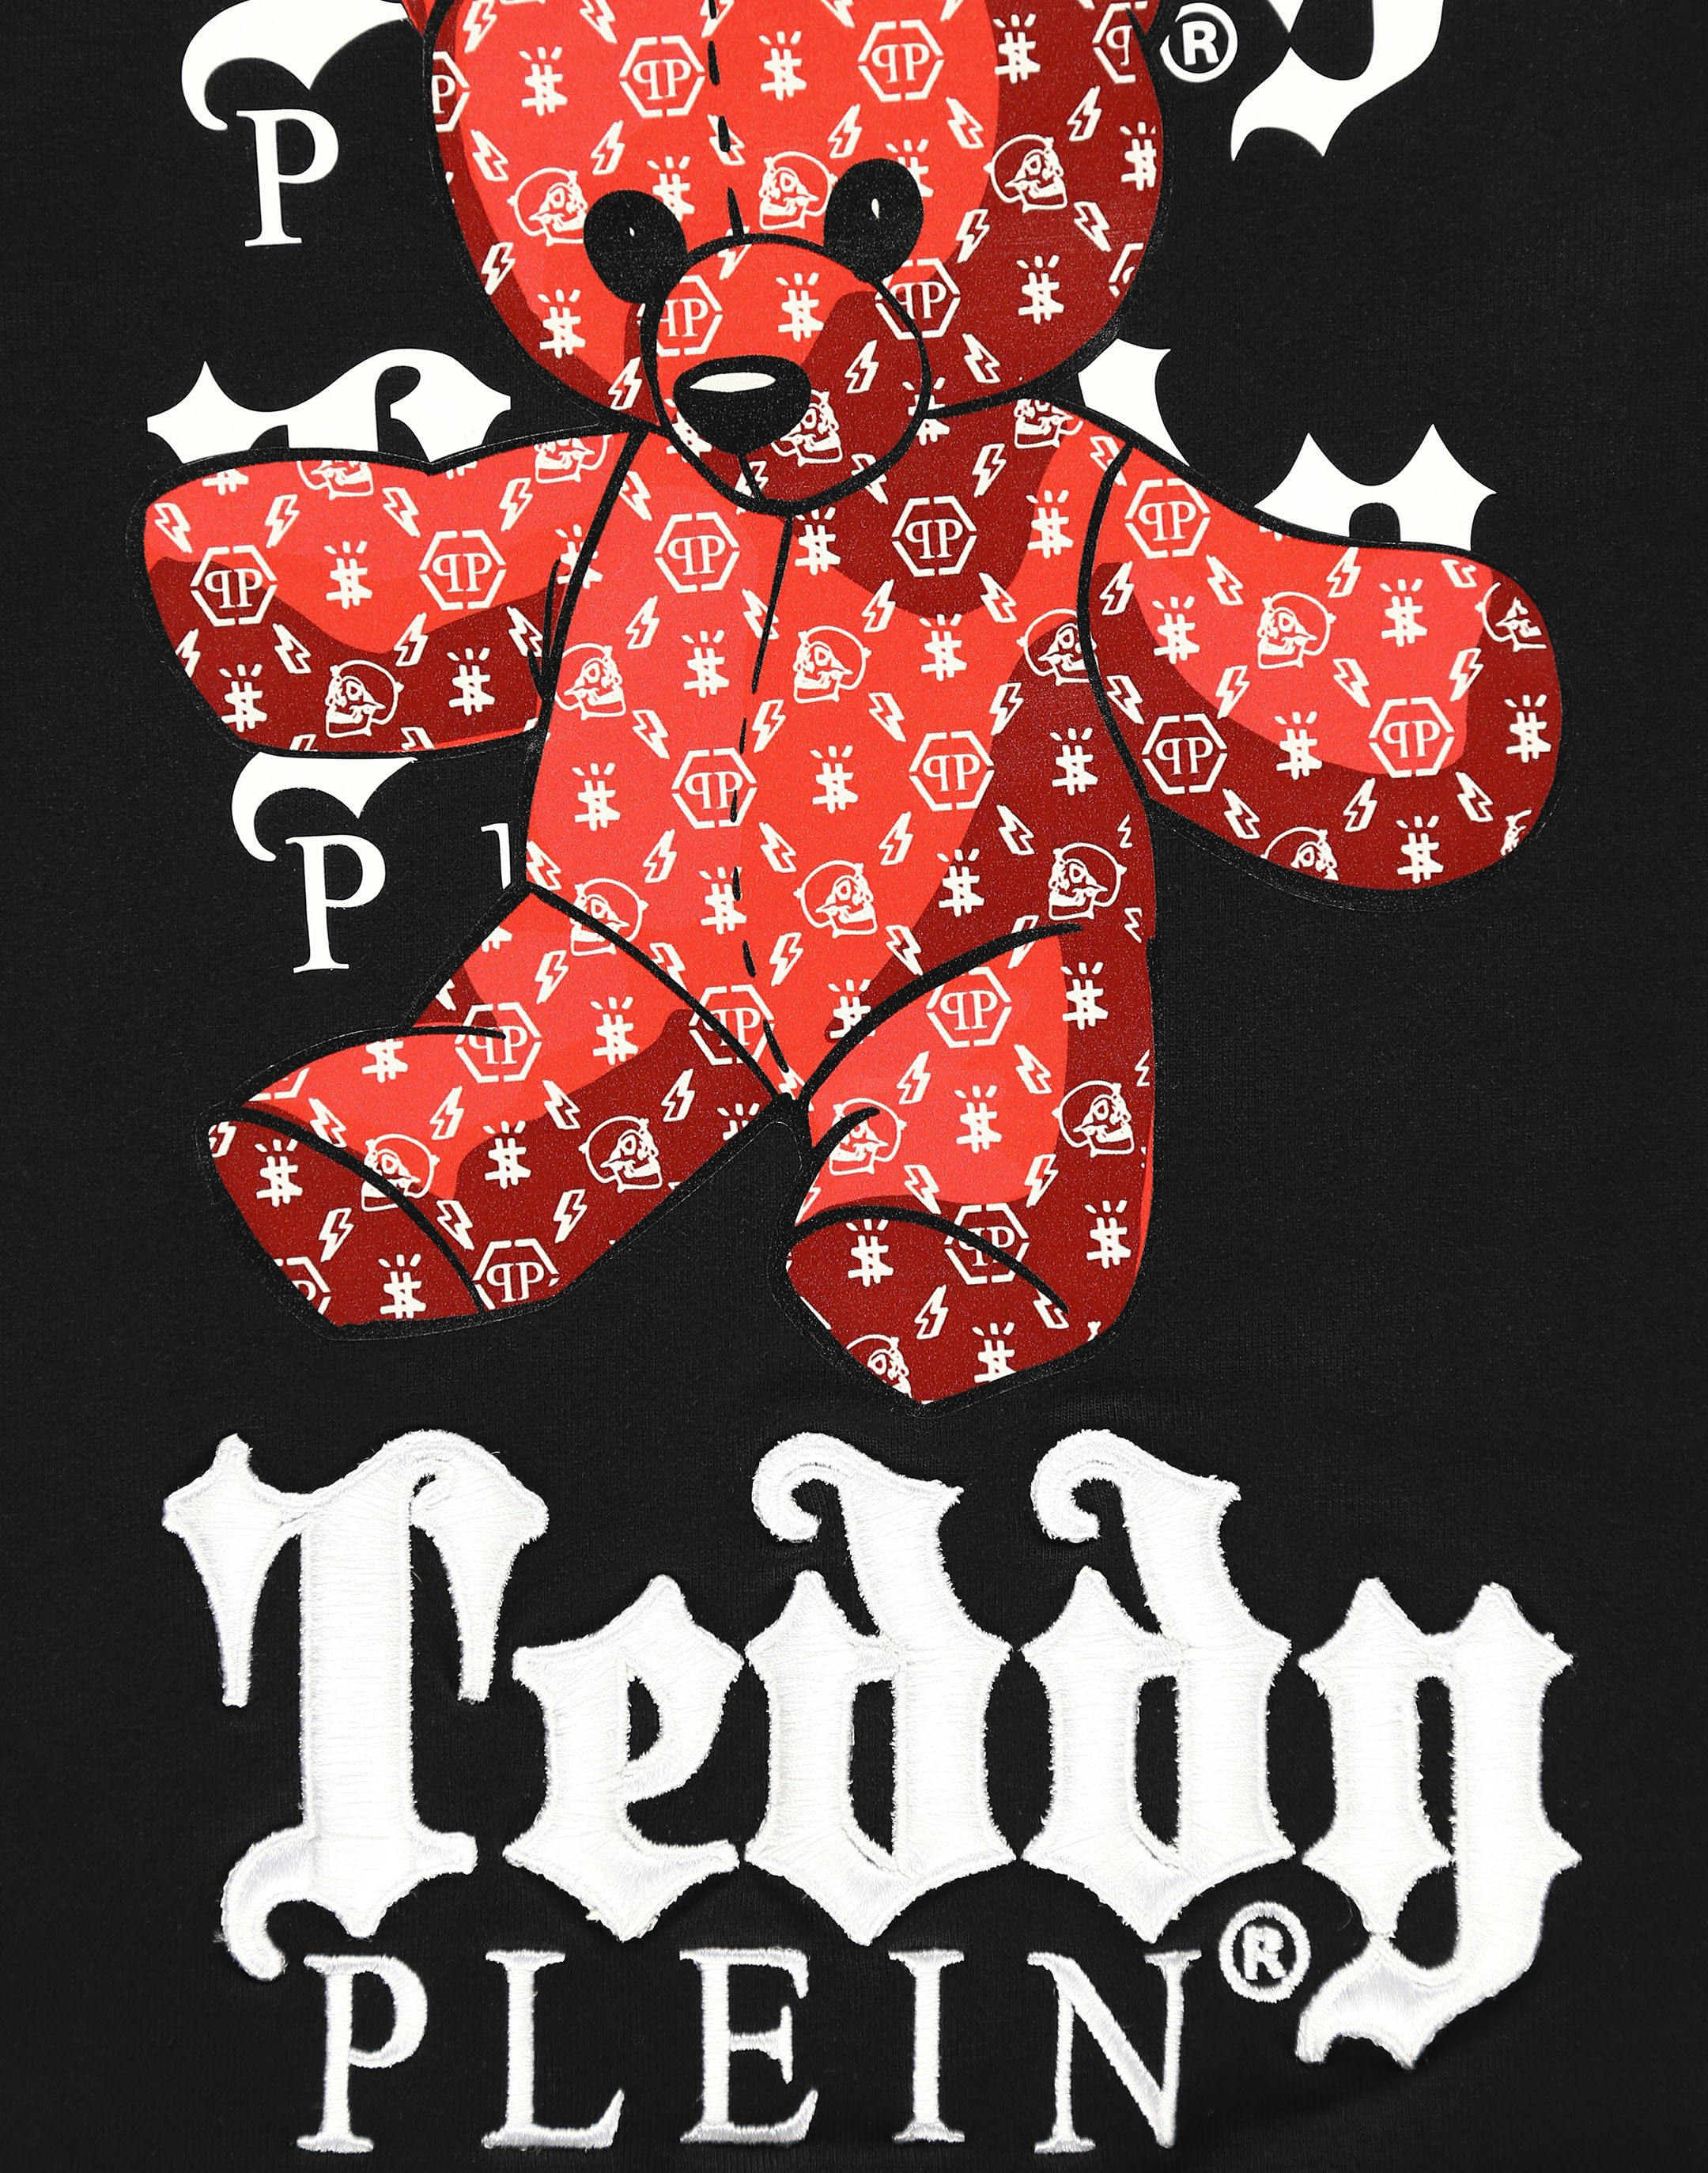 Hoodie sweatshirt Teddy Bear | Philipp Plein Outlet